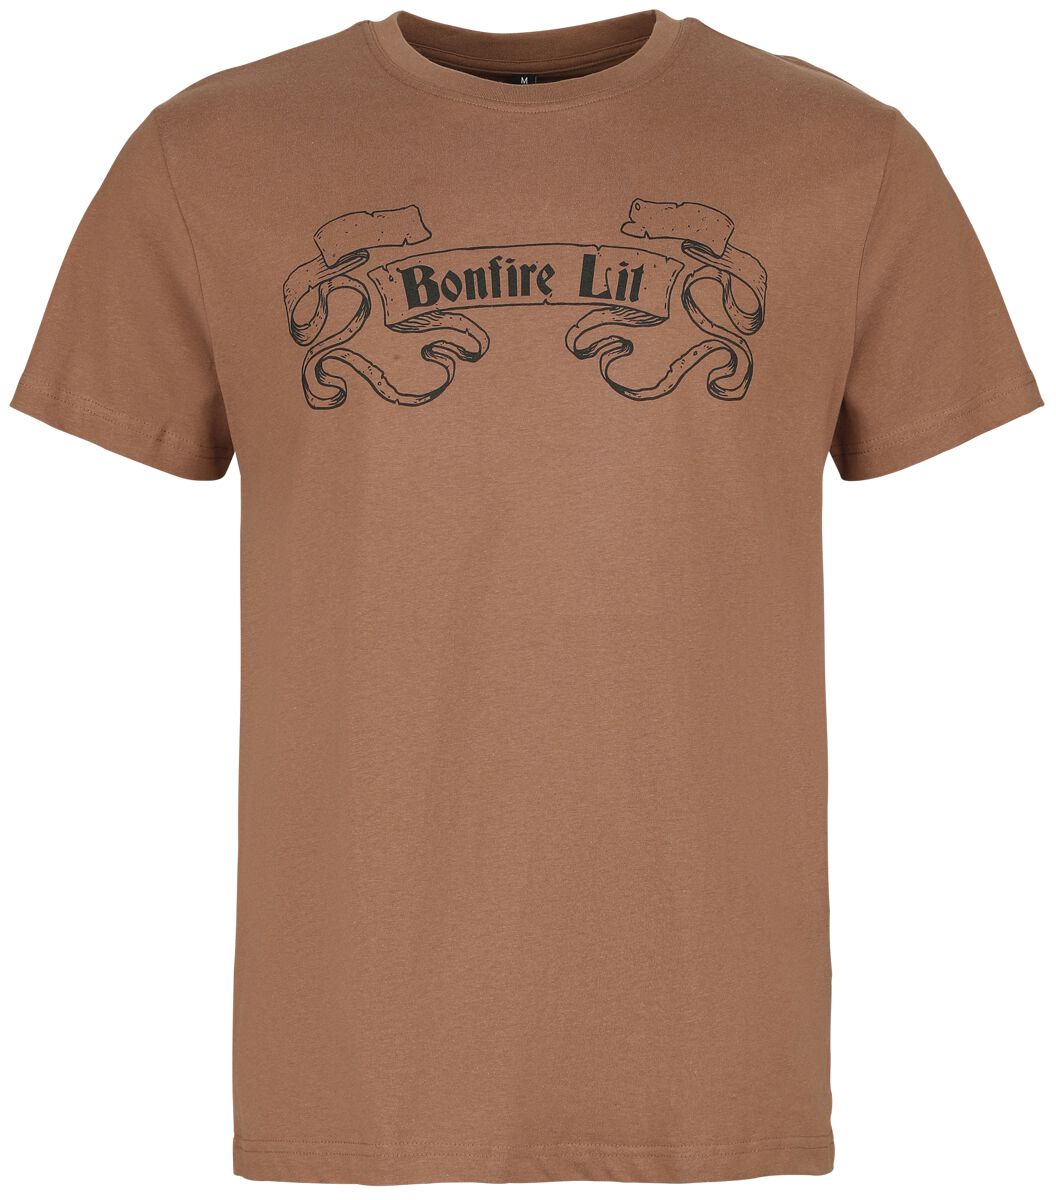 Dark Souls Bonfire Lit T-Shirt braun in S